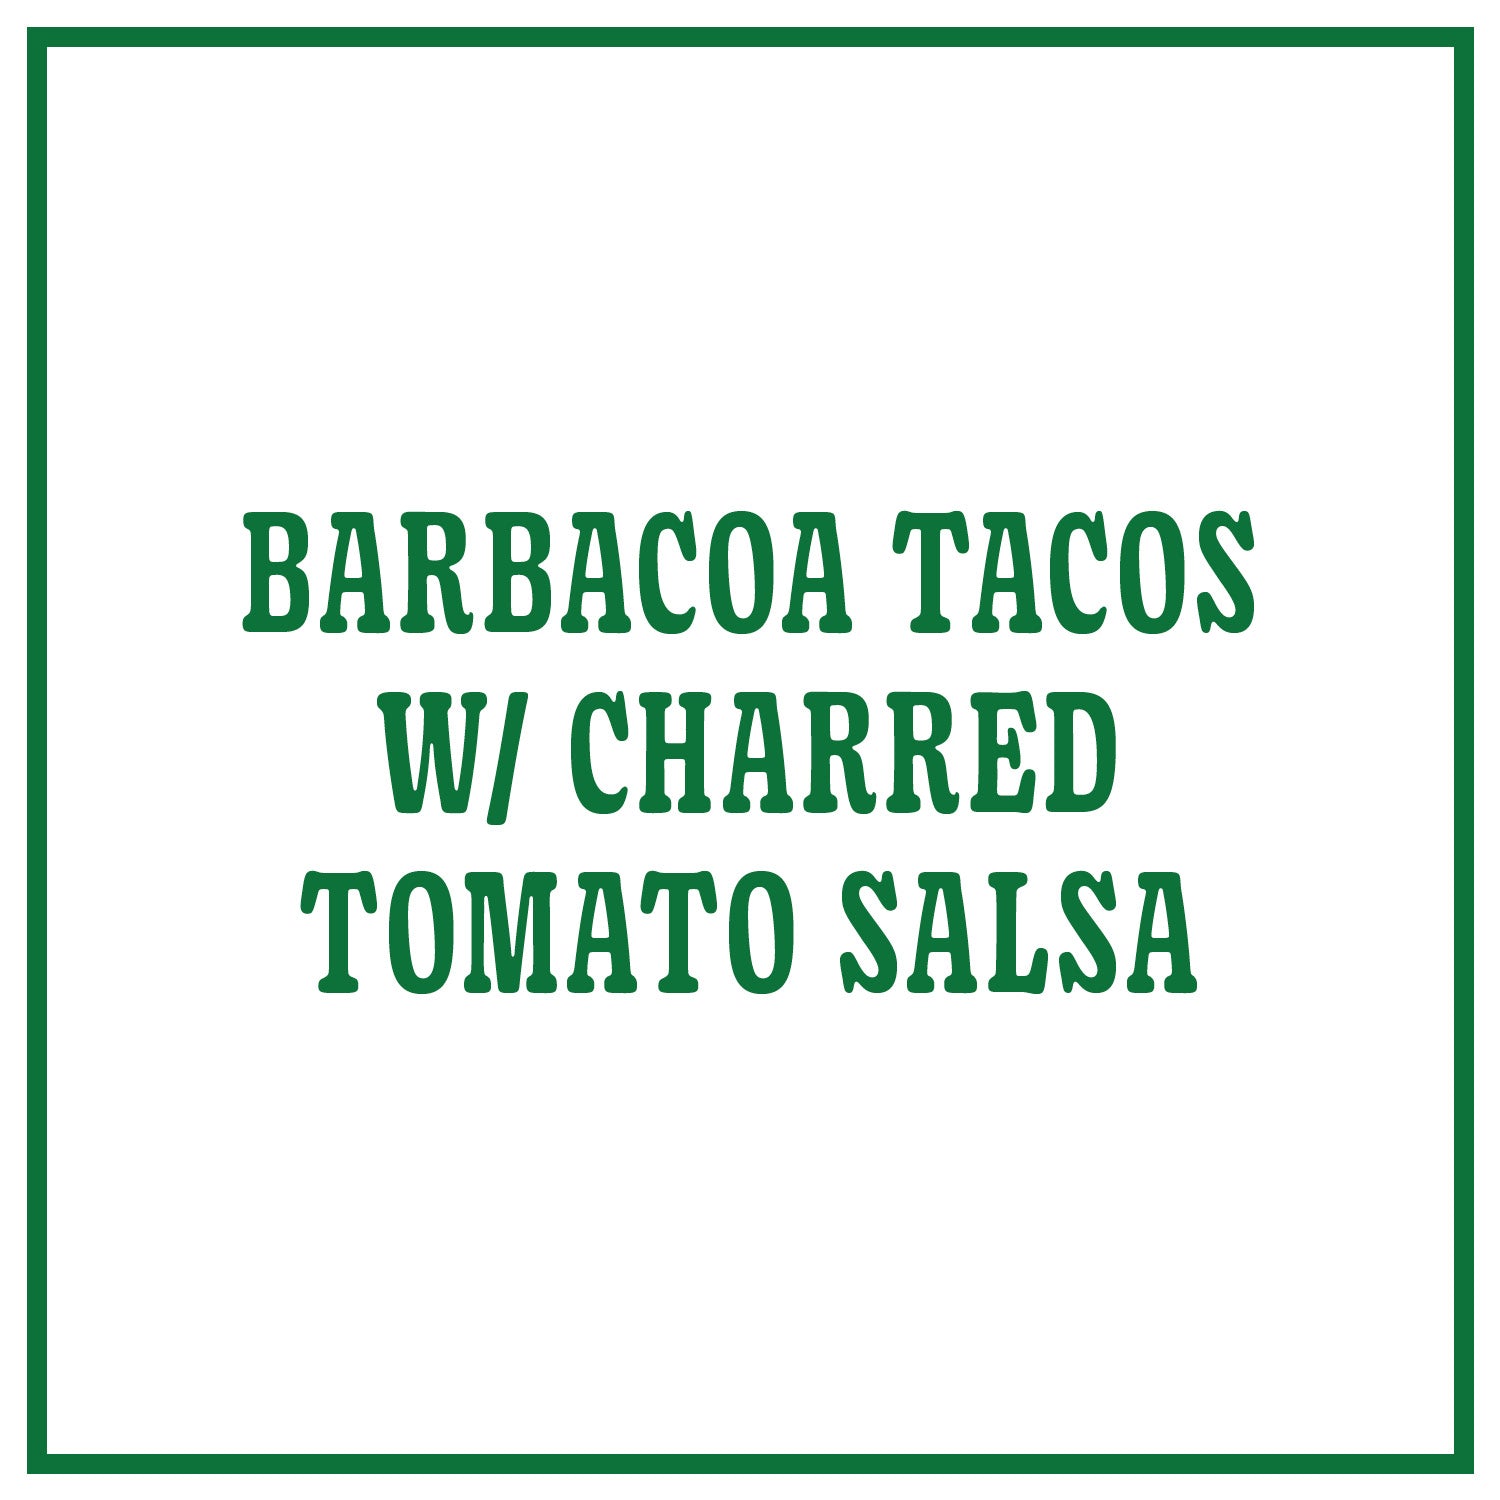 Barbacoa Tacos with Charred Tomato Salsa